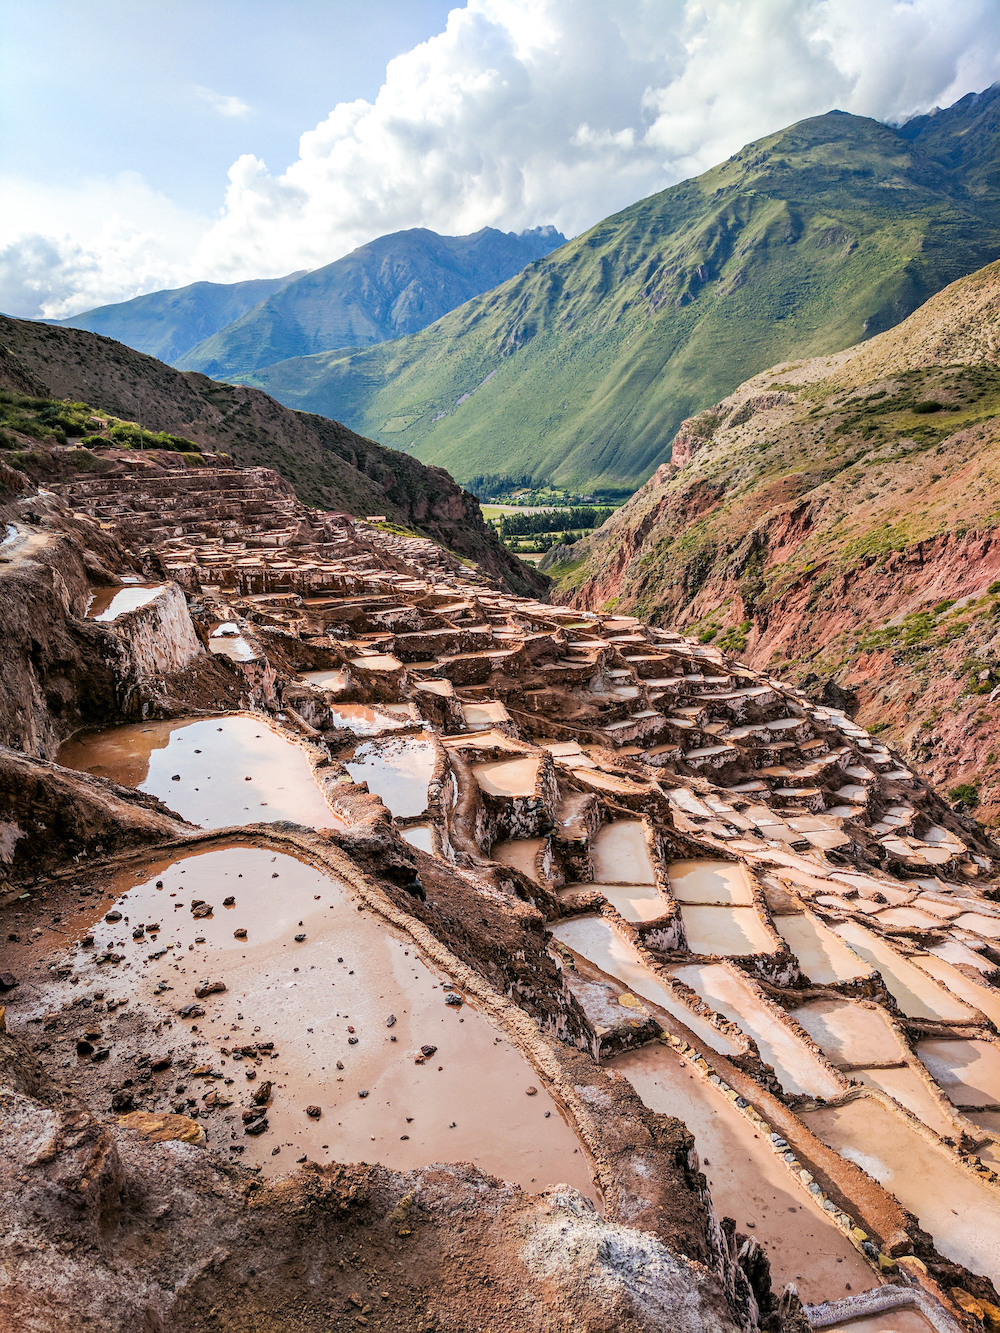 Maras salt flats in Peru